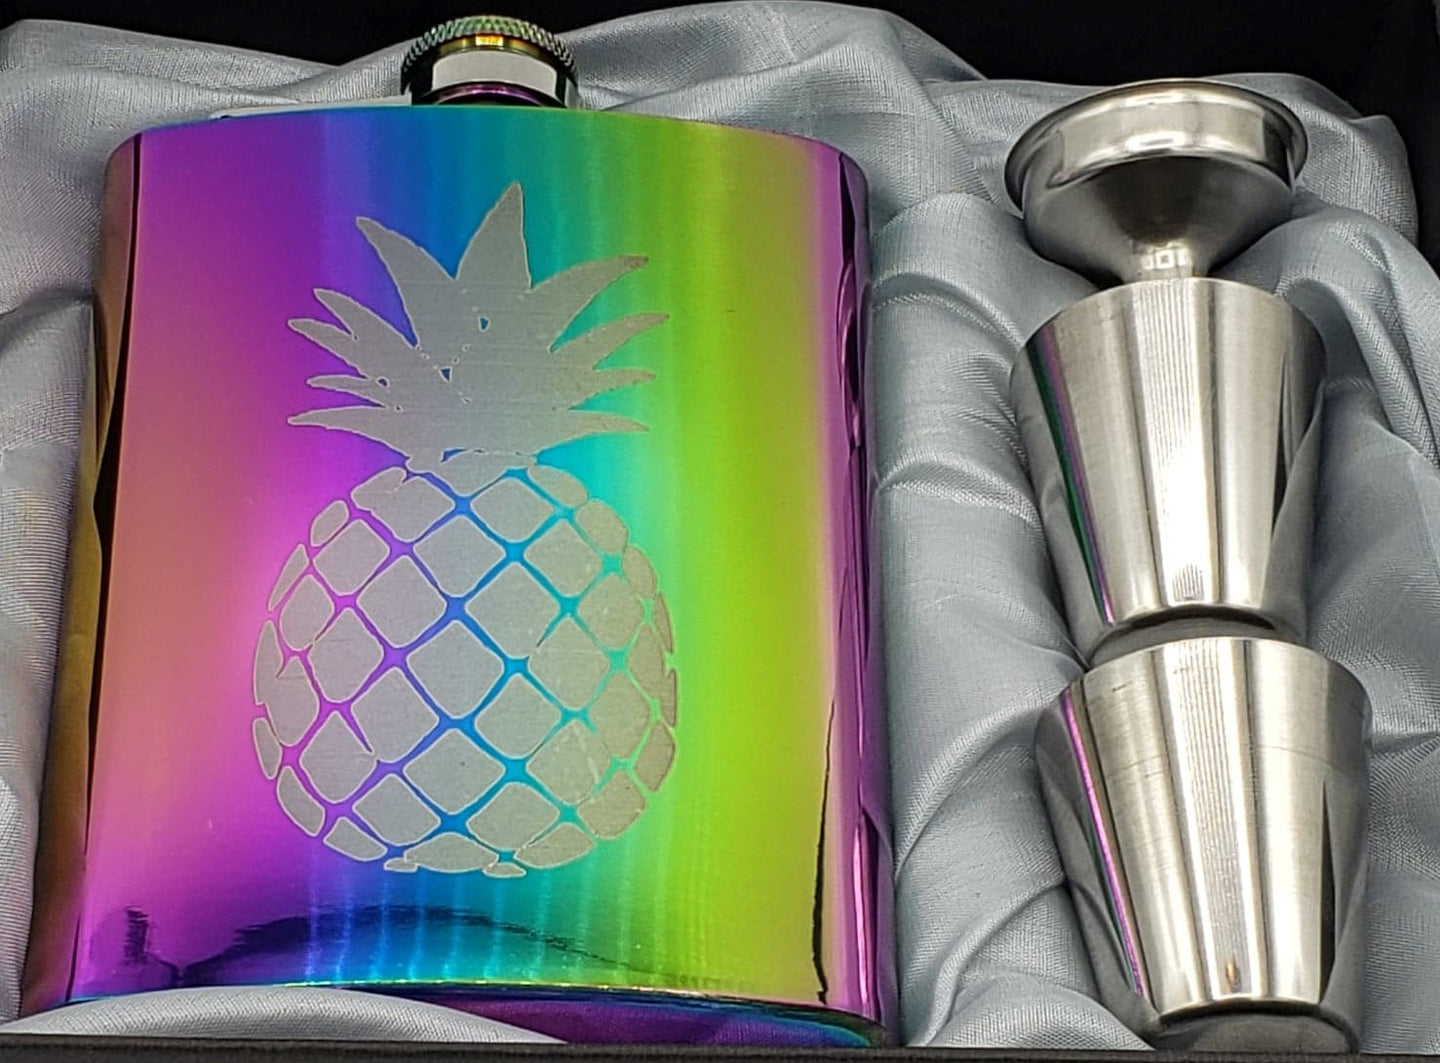 8 oz Rainbow Stainless Steel Pineapple Flask Gift Box Set Funnel & Shot Glasses Metal